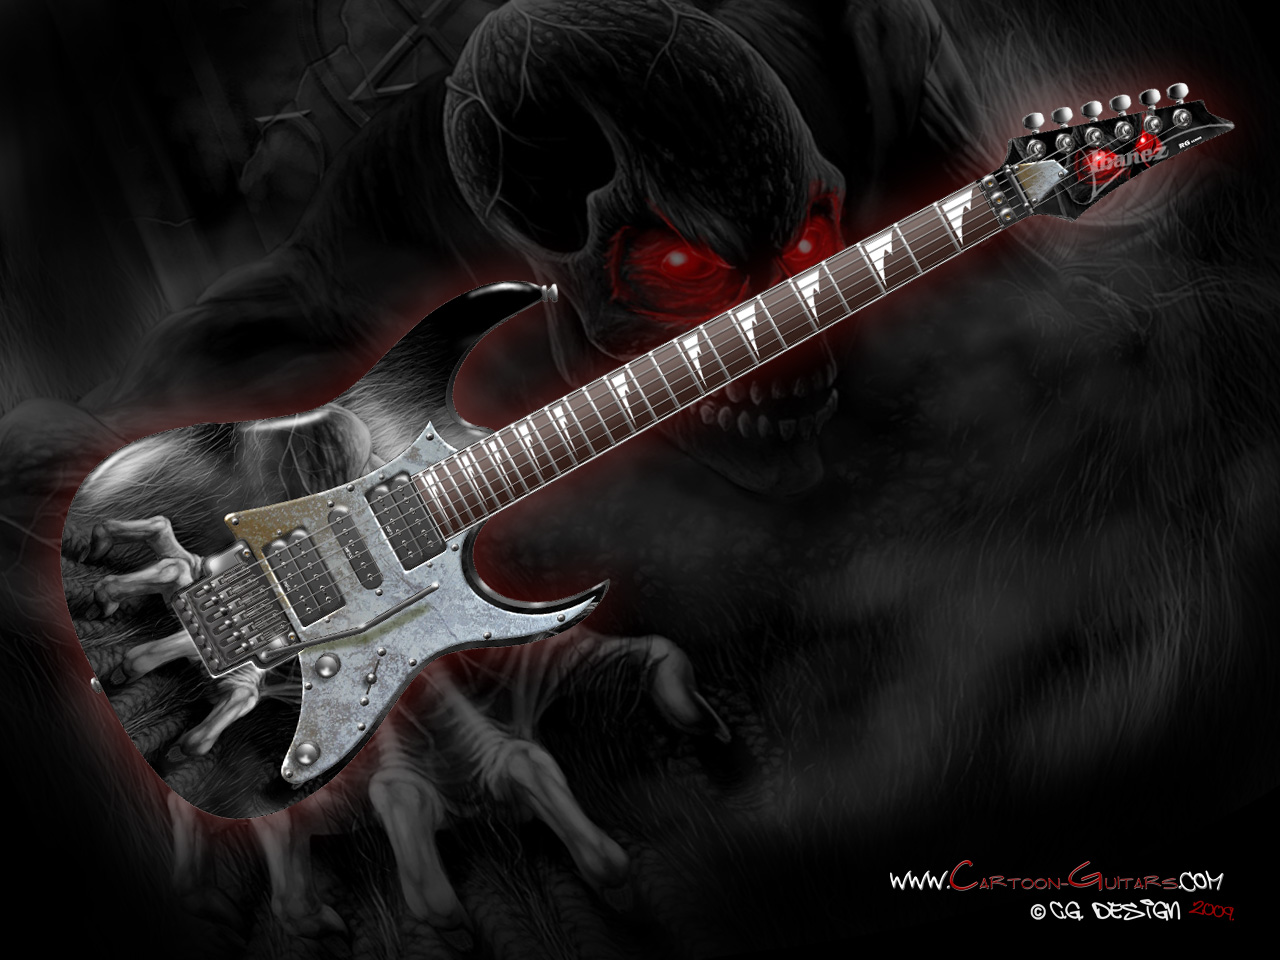 Fond ecran Guitare Demon   Id 2995   Rubrique de limage Art